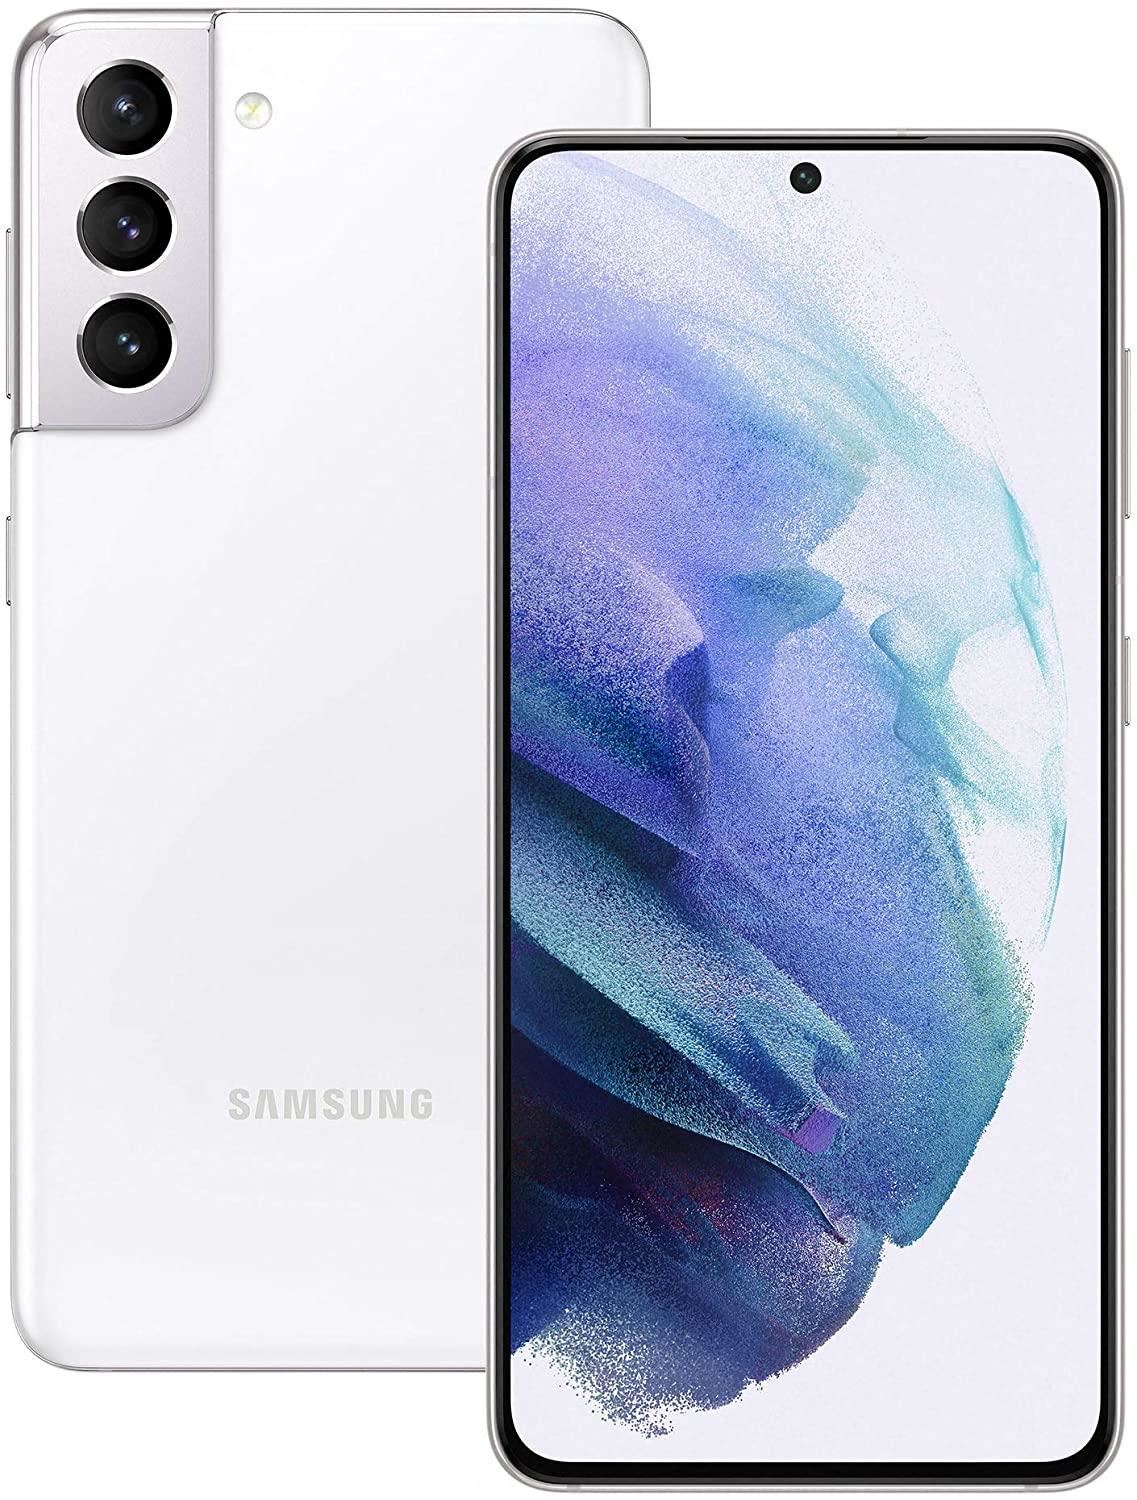 Samsung Galaxy S21 5G Smartphone Unlocked 128-256GB